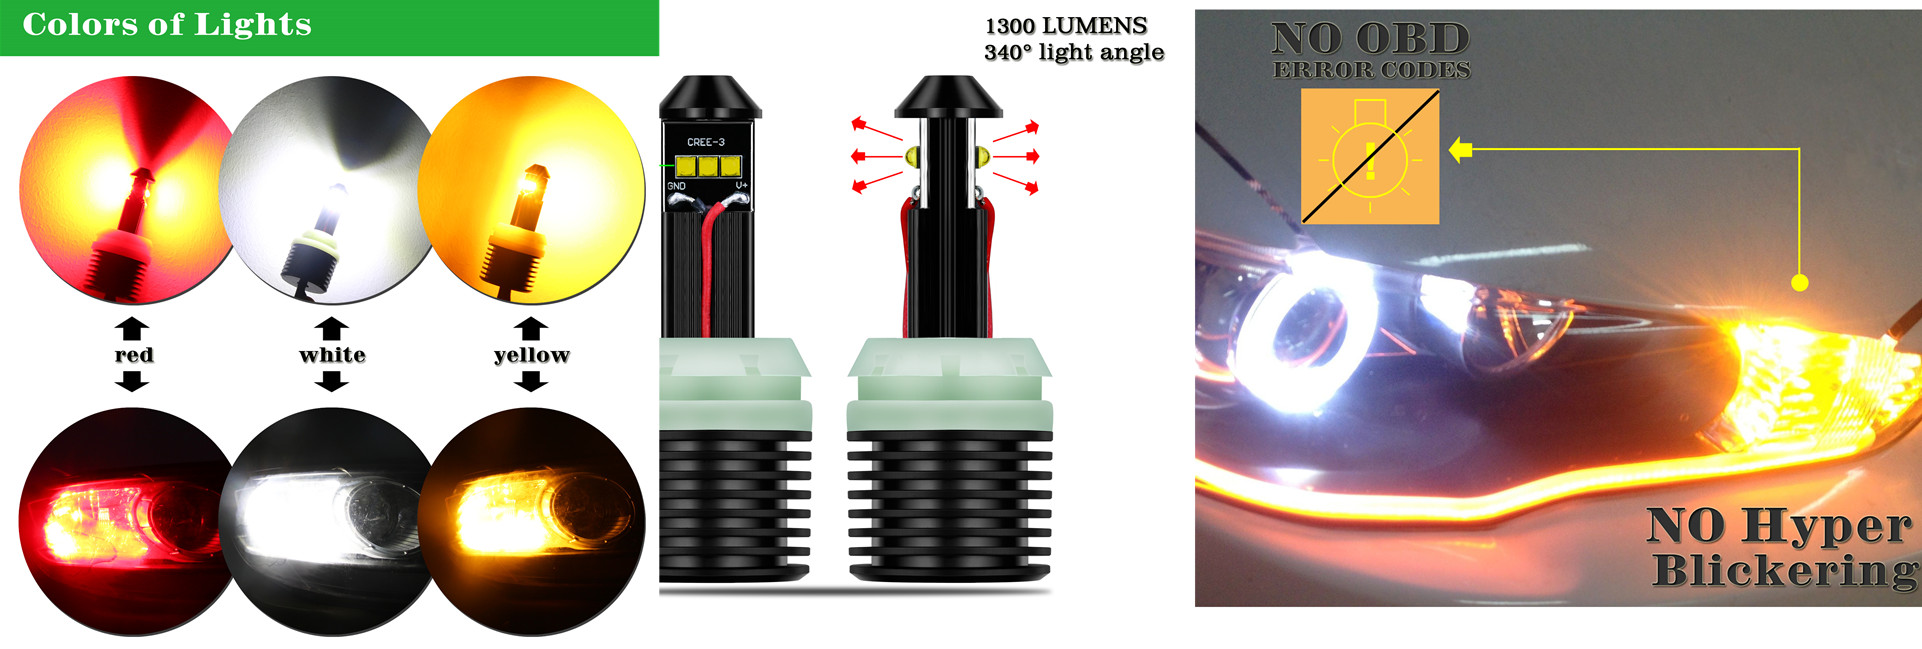 2x 33smd 7440 Rear Turn Signal Light 6000K LED Bulb for 03~17 Honda Accord  Civic